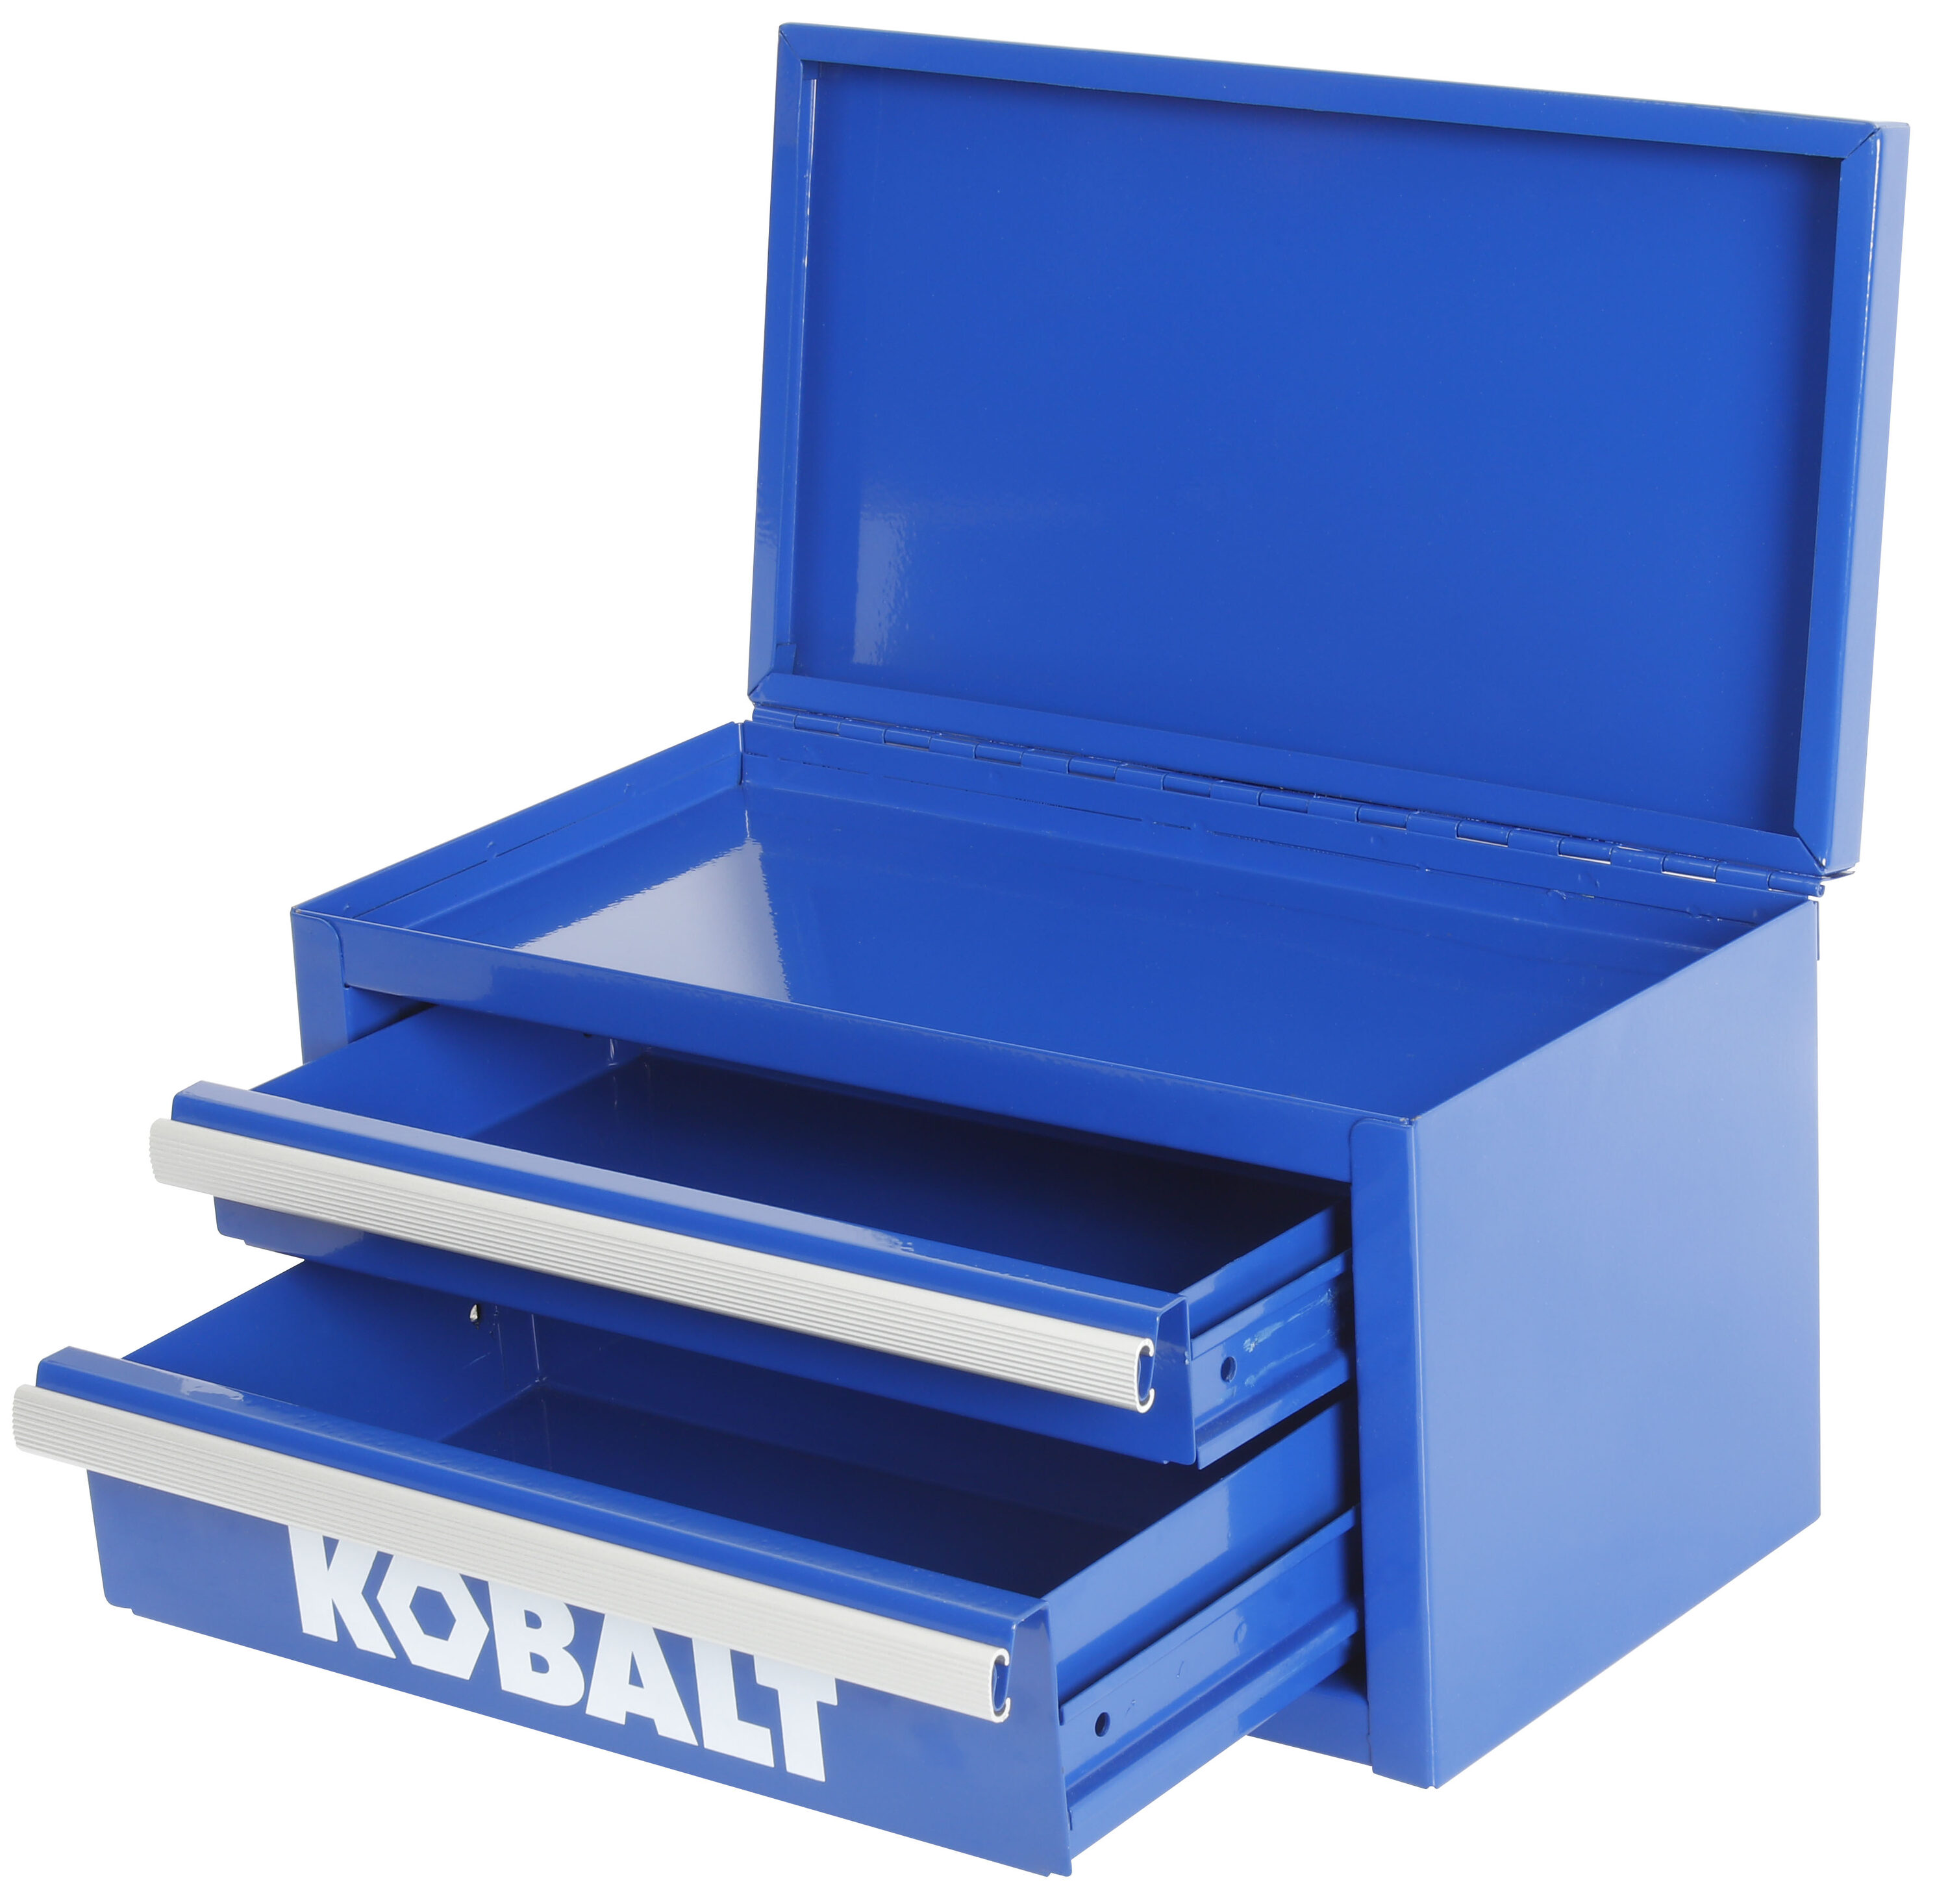 Kobalt Mini Toolbox Lid Holder by Shachem